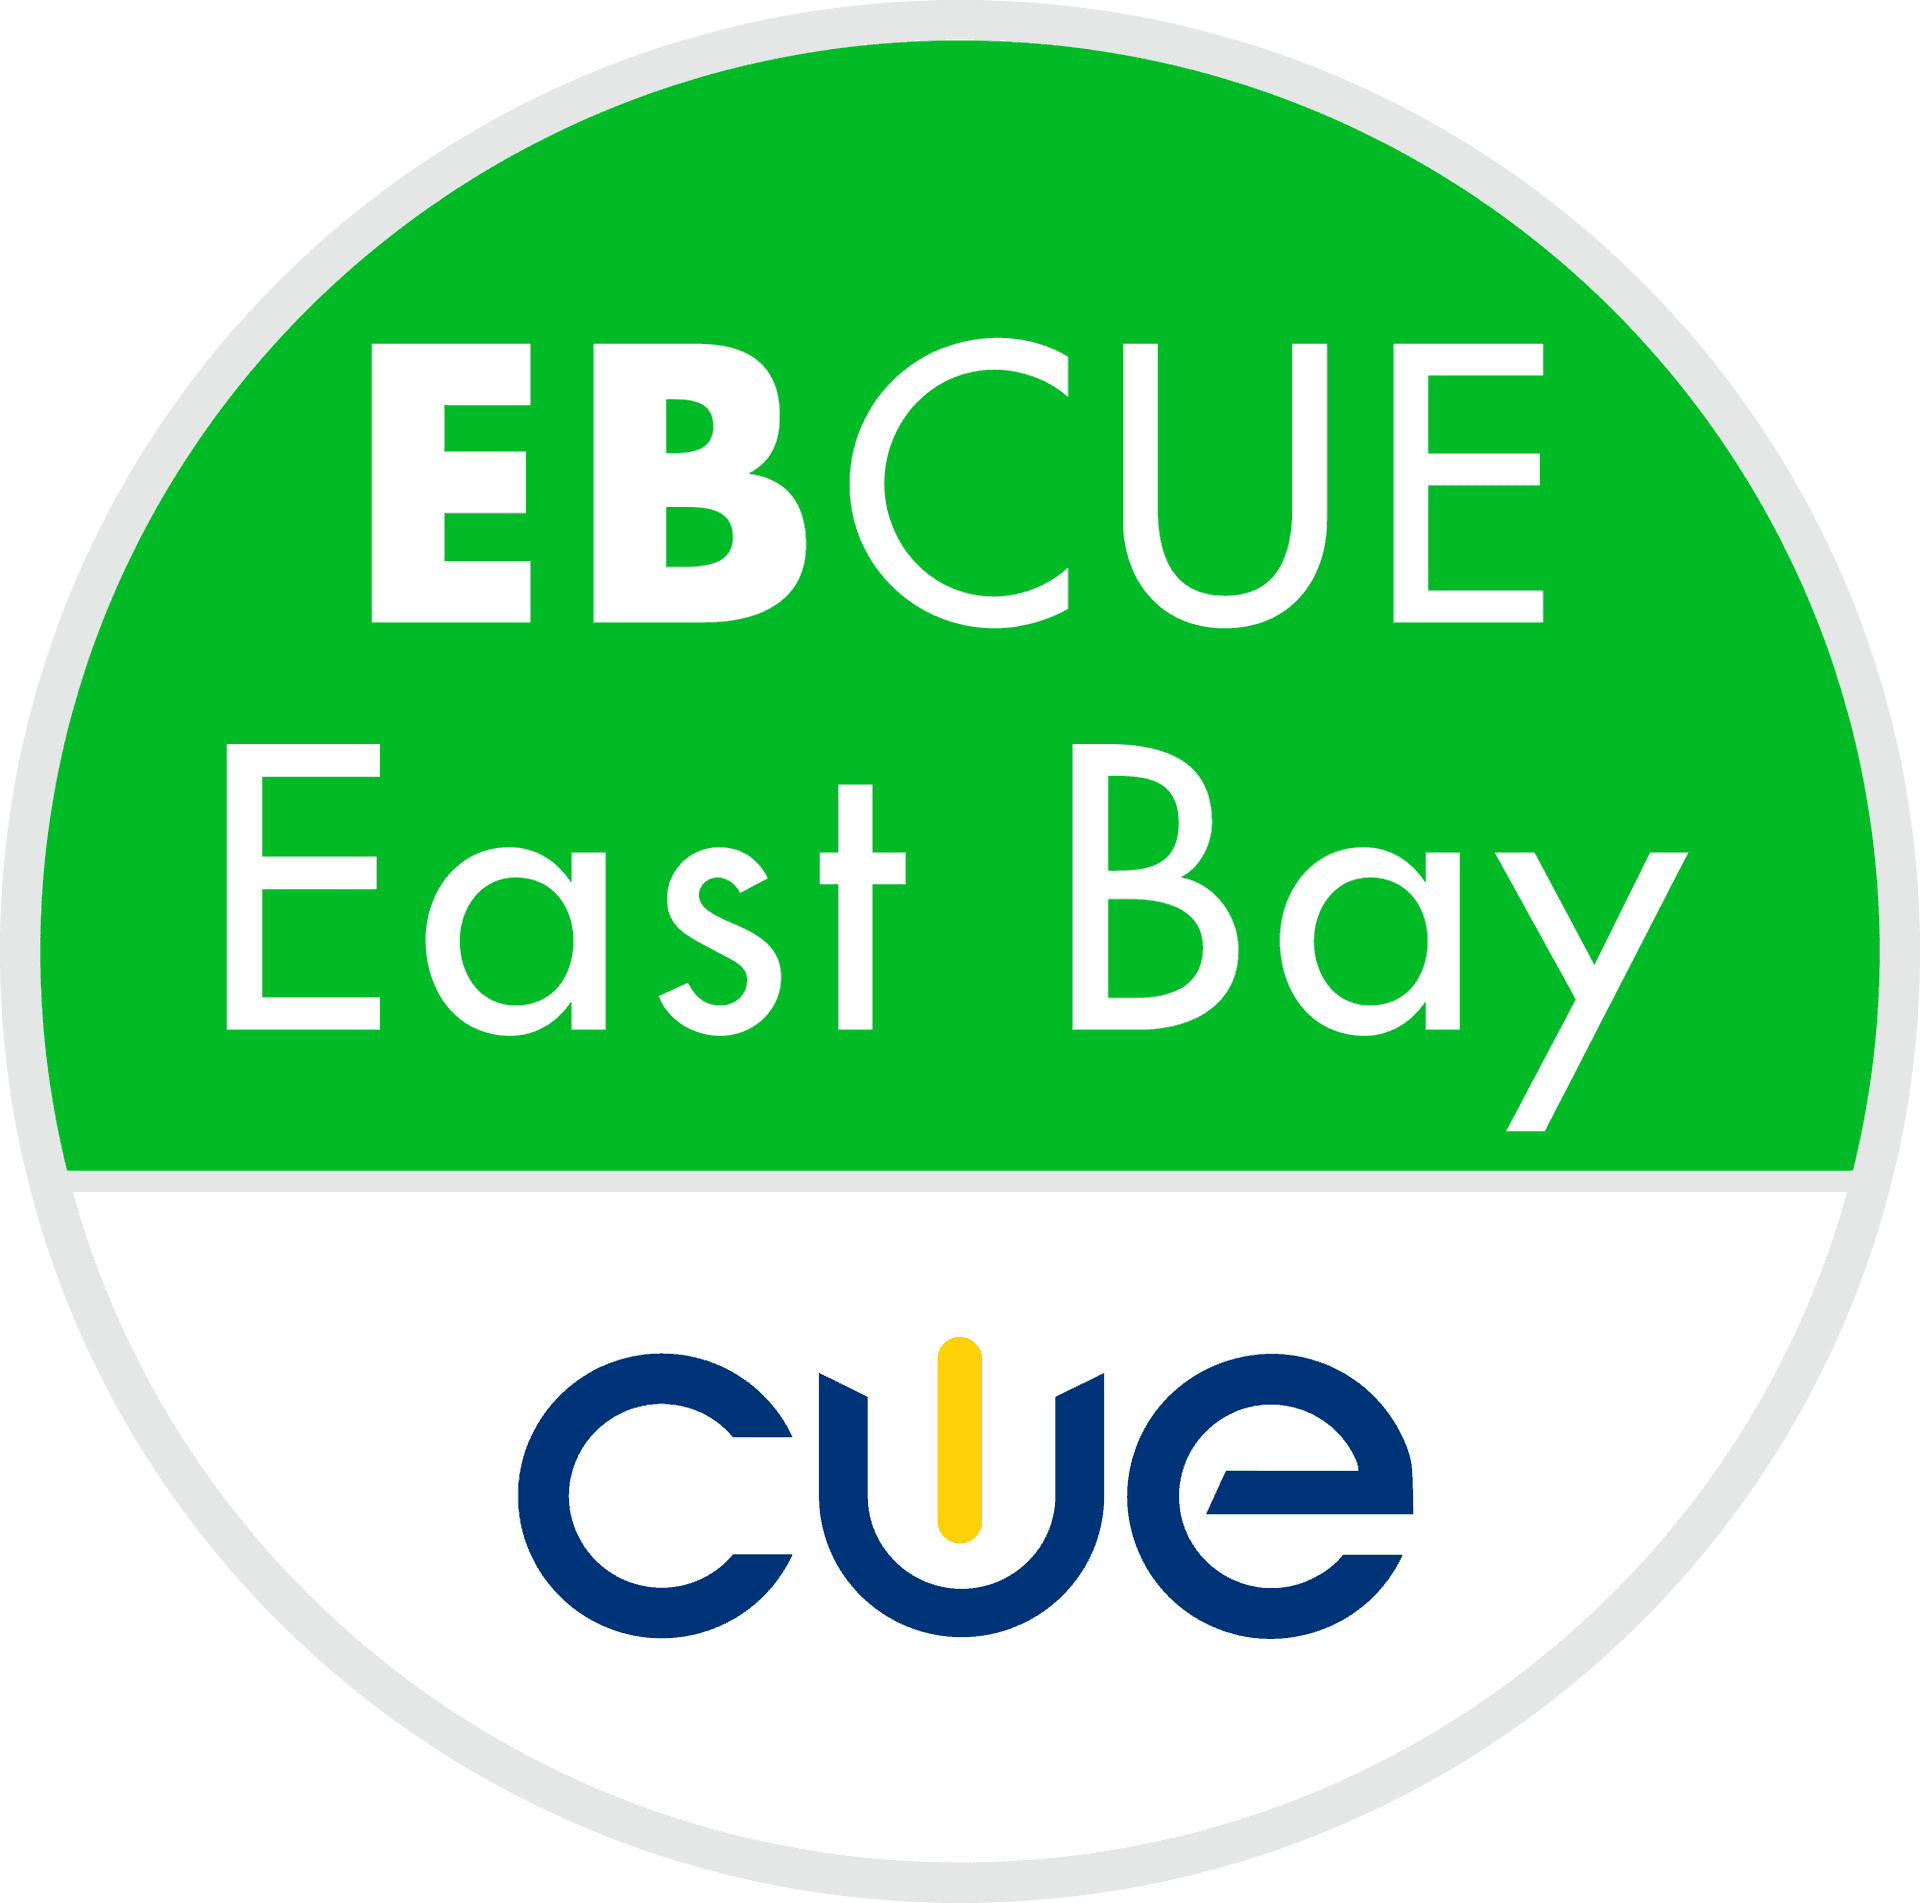 East Bay C U E Logo PNG image